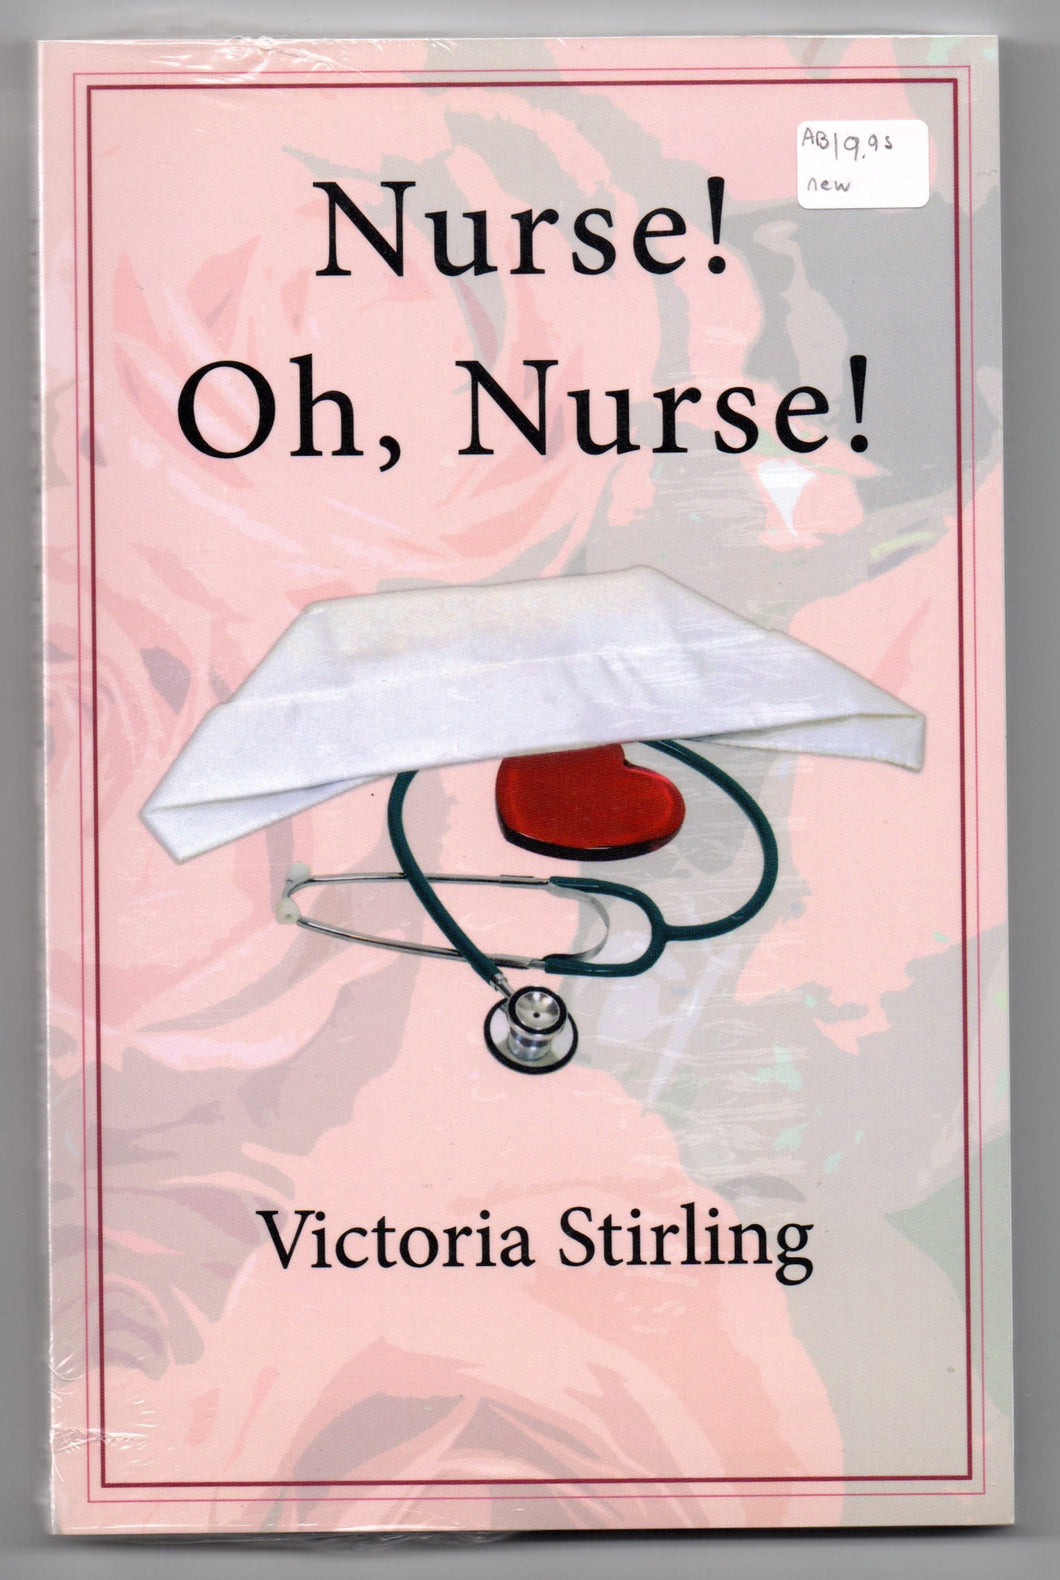 Nurse! Oh, Nurse!